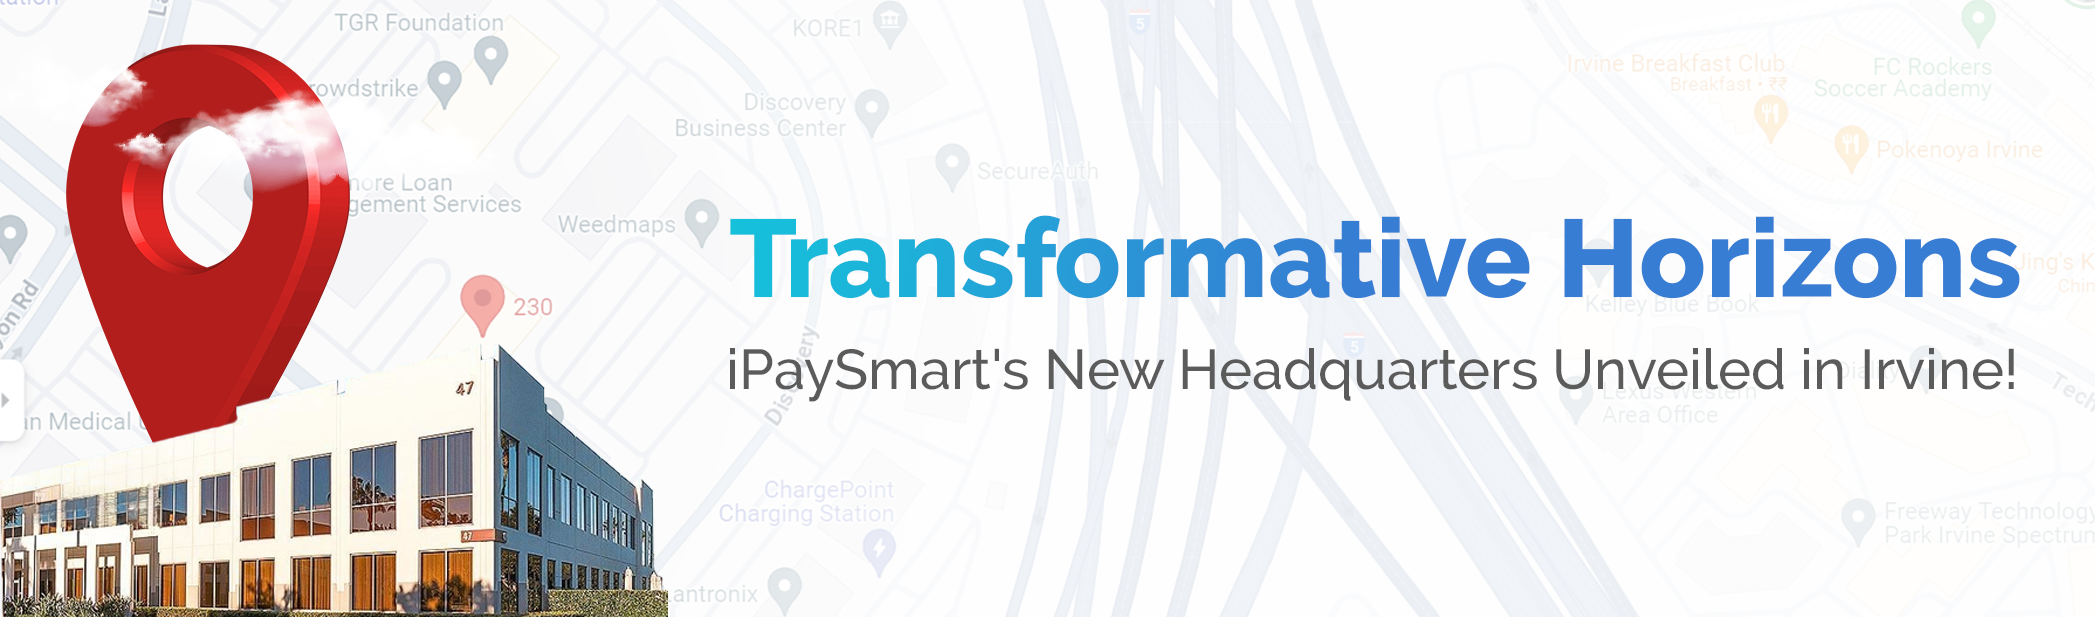 Transformative Horizons: iPaySmart's New Headquarters Unveiled in Irvine!